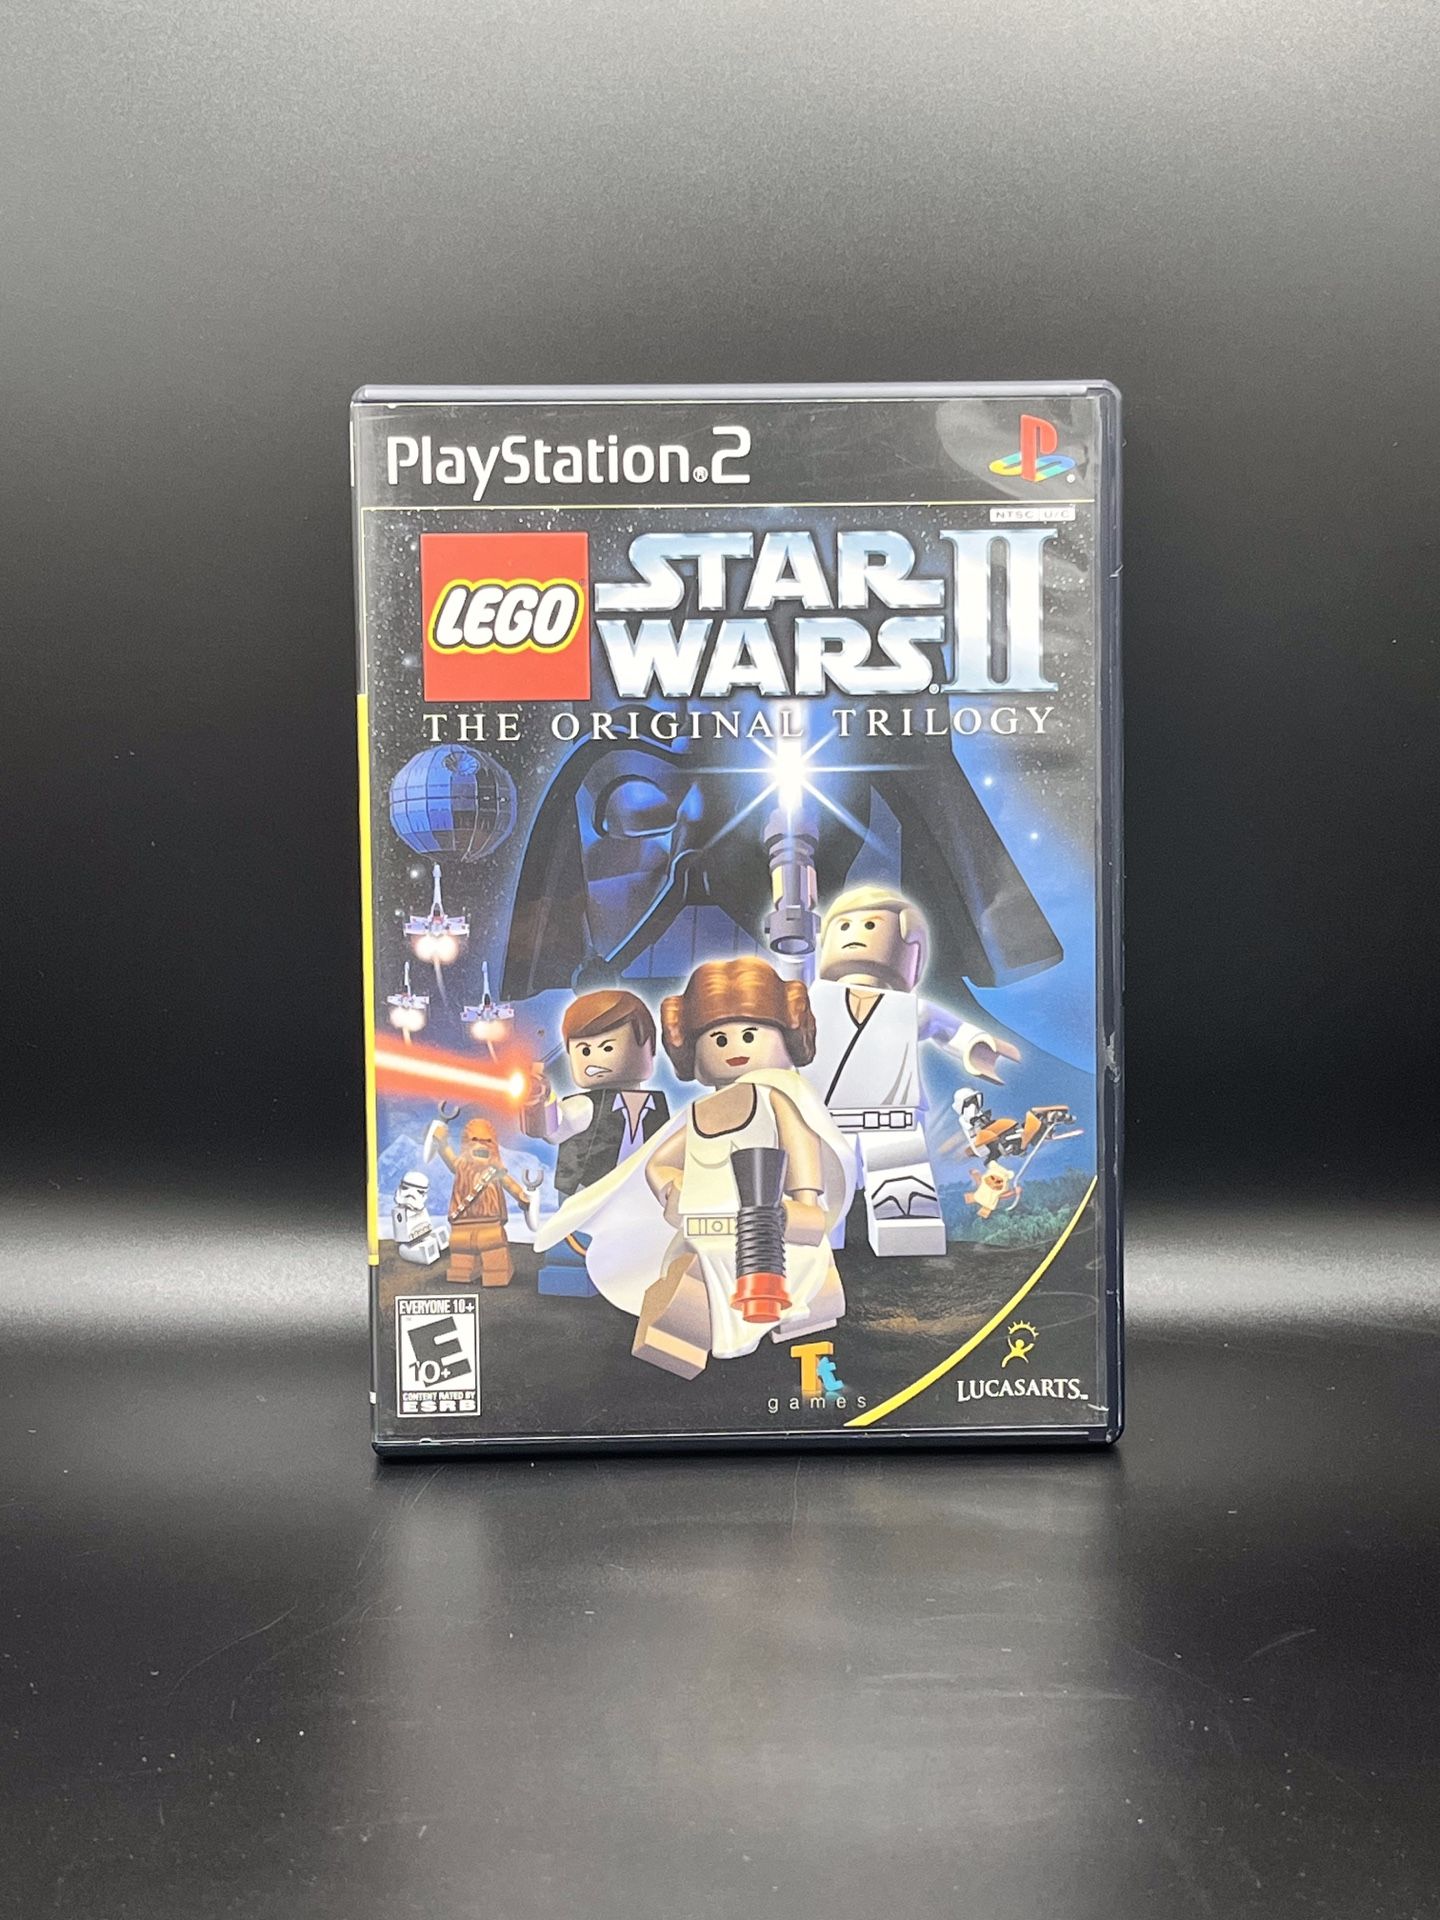 Lego Star Wars II: The Original Trilogy (PS2)